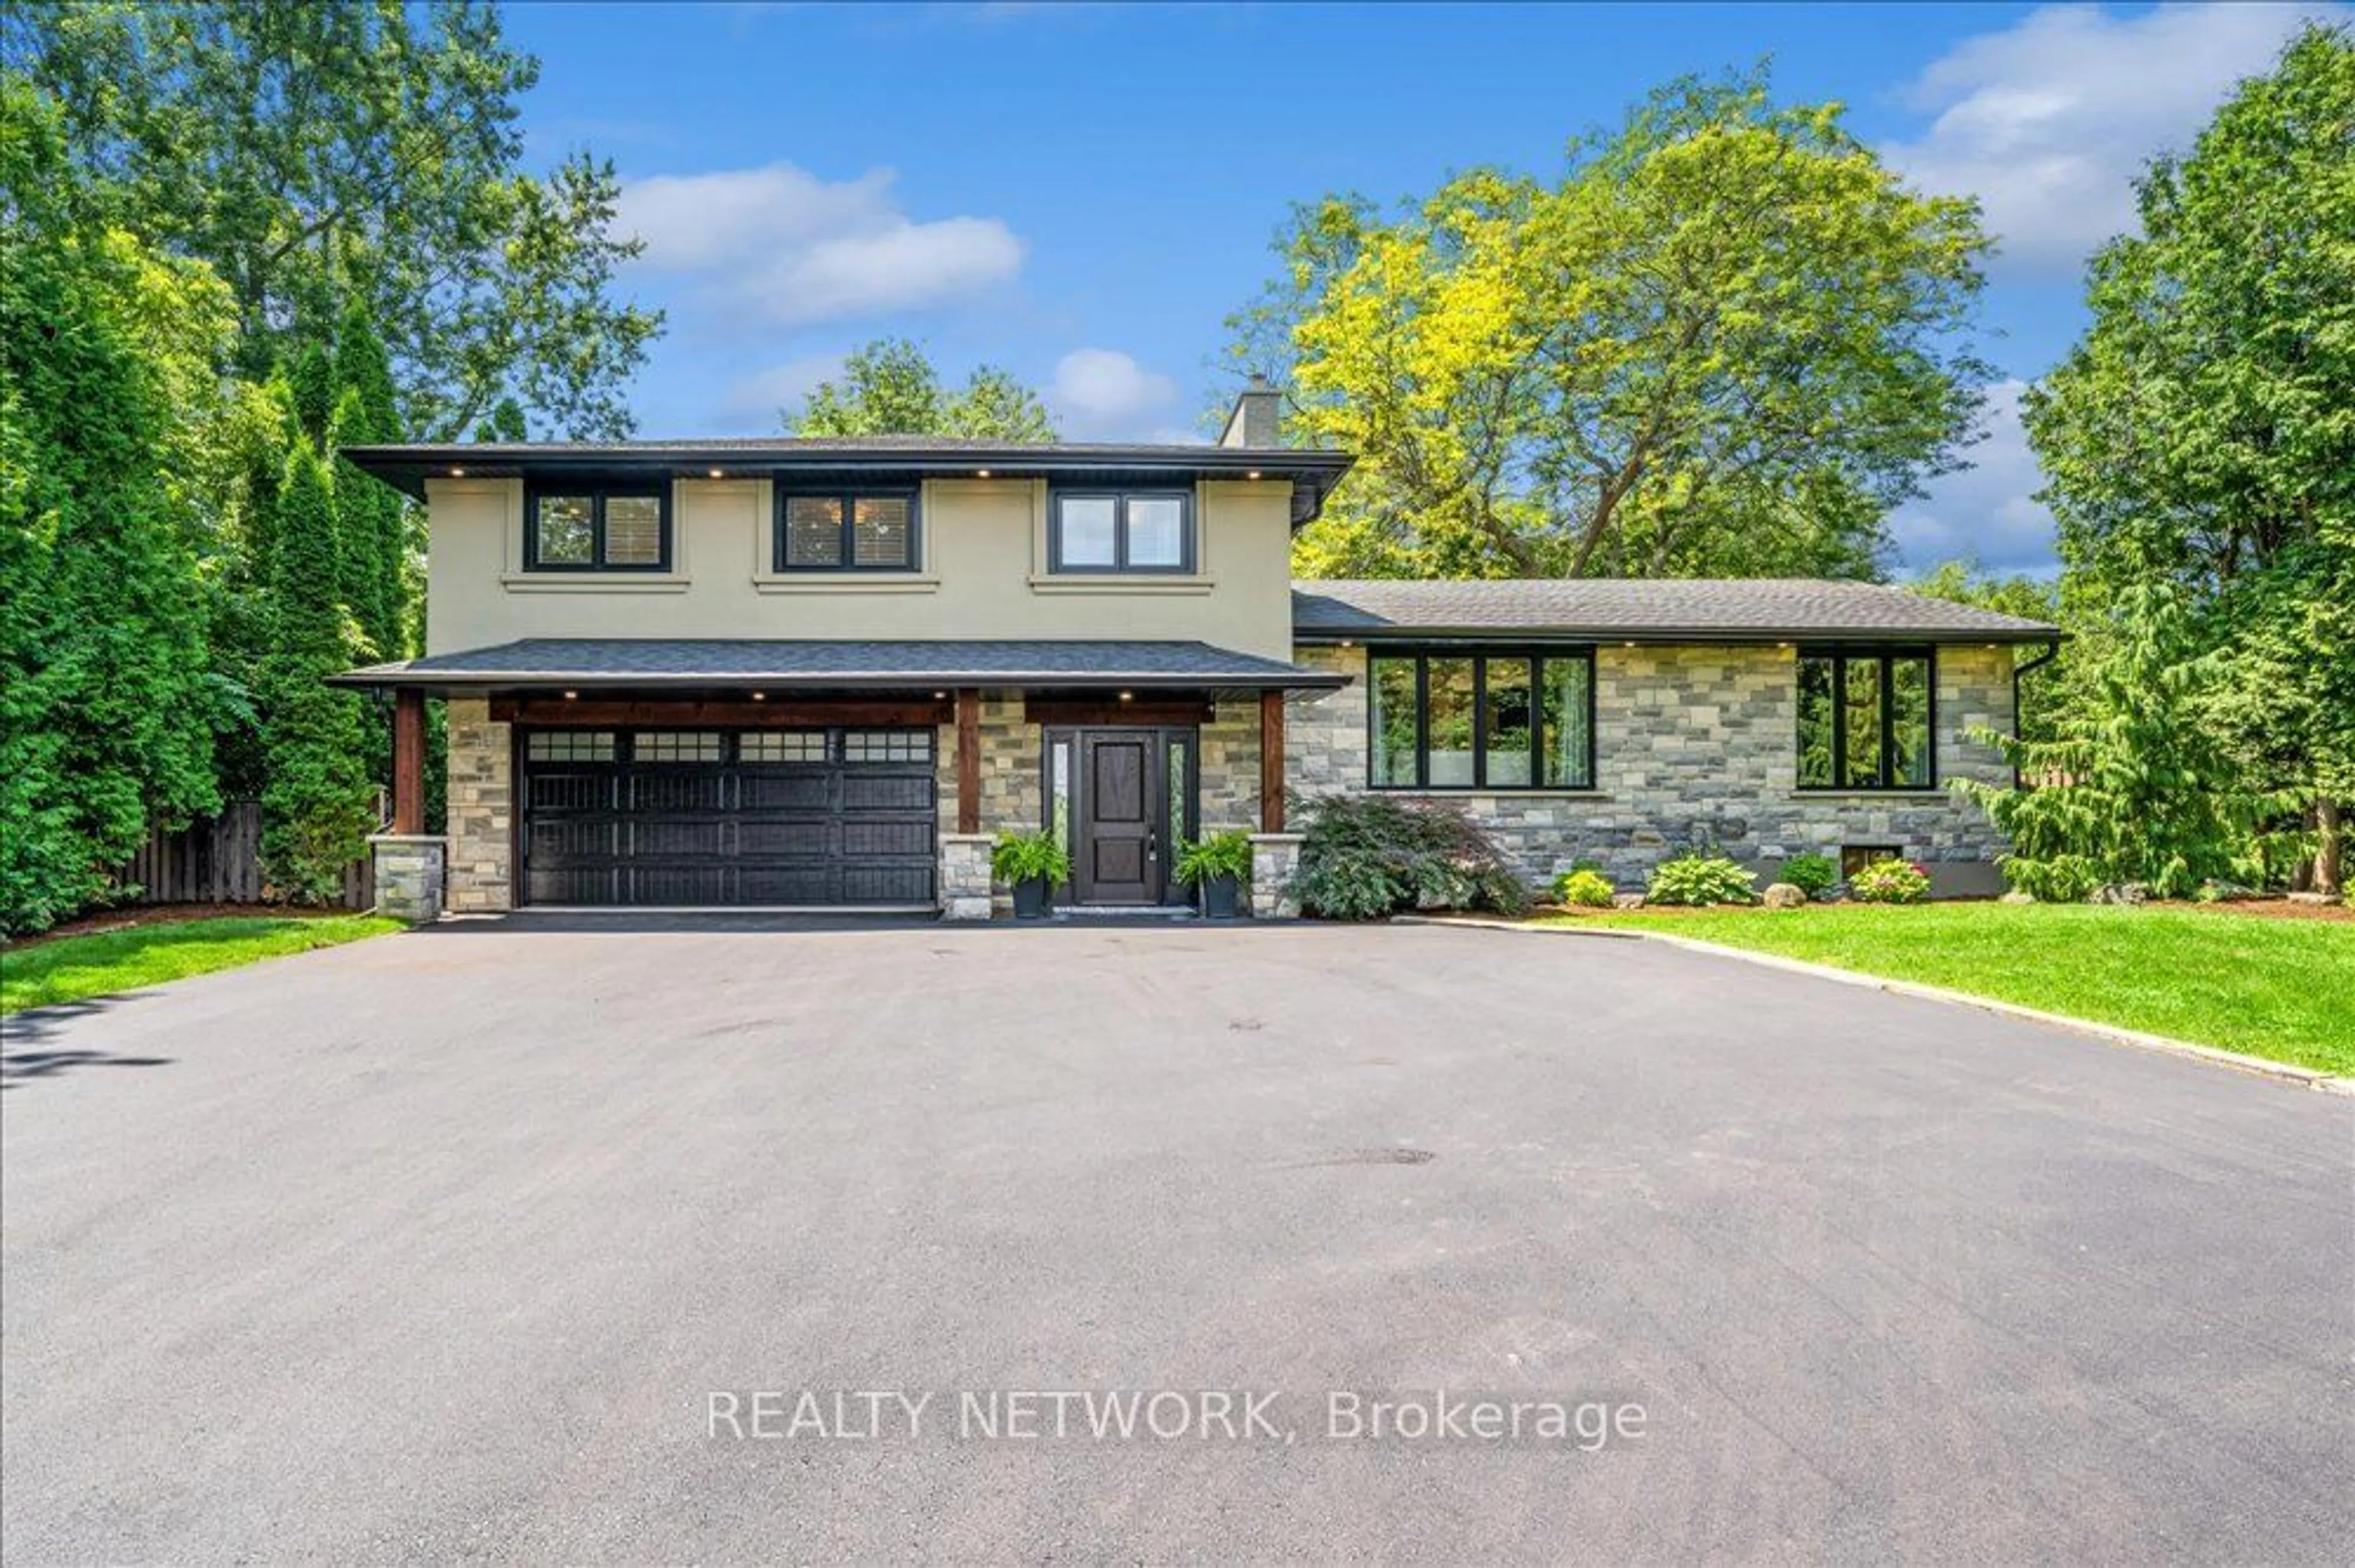 Home with brick exterior material for 9049 Twenty Rd, Hamilton Ontario L0R 1W0